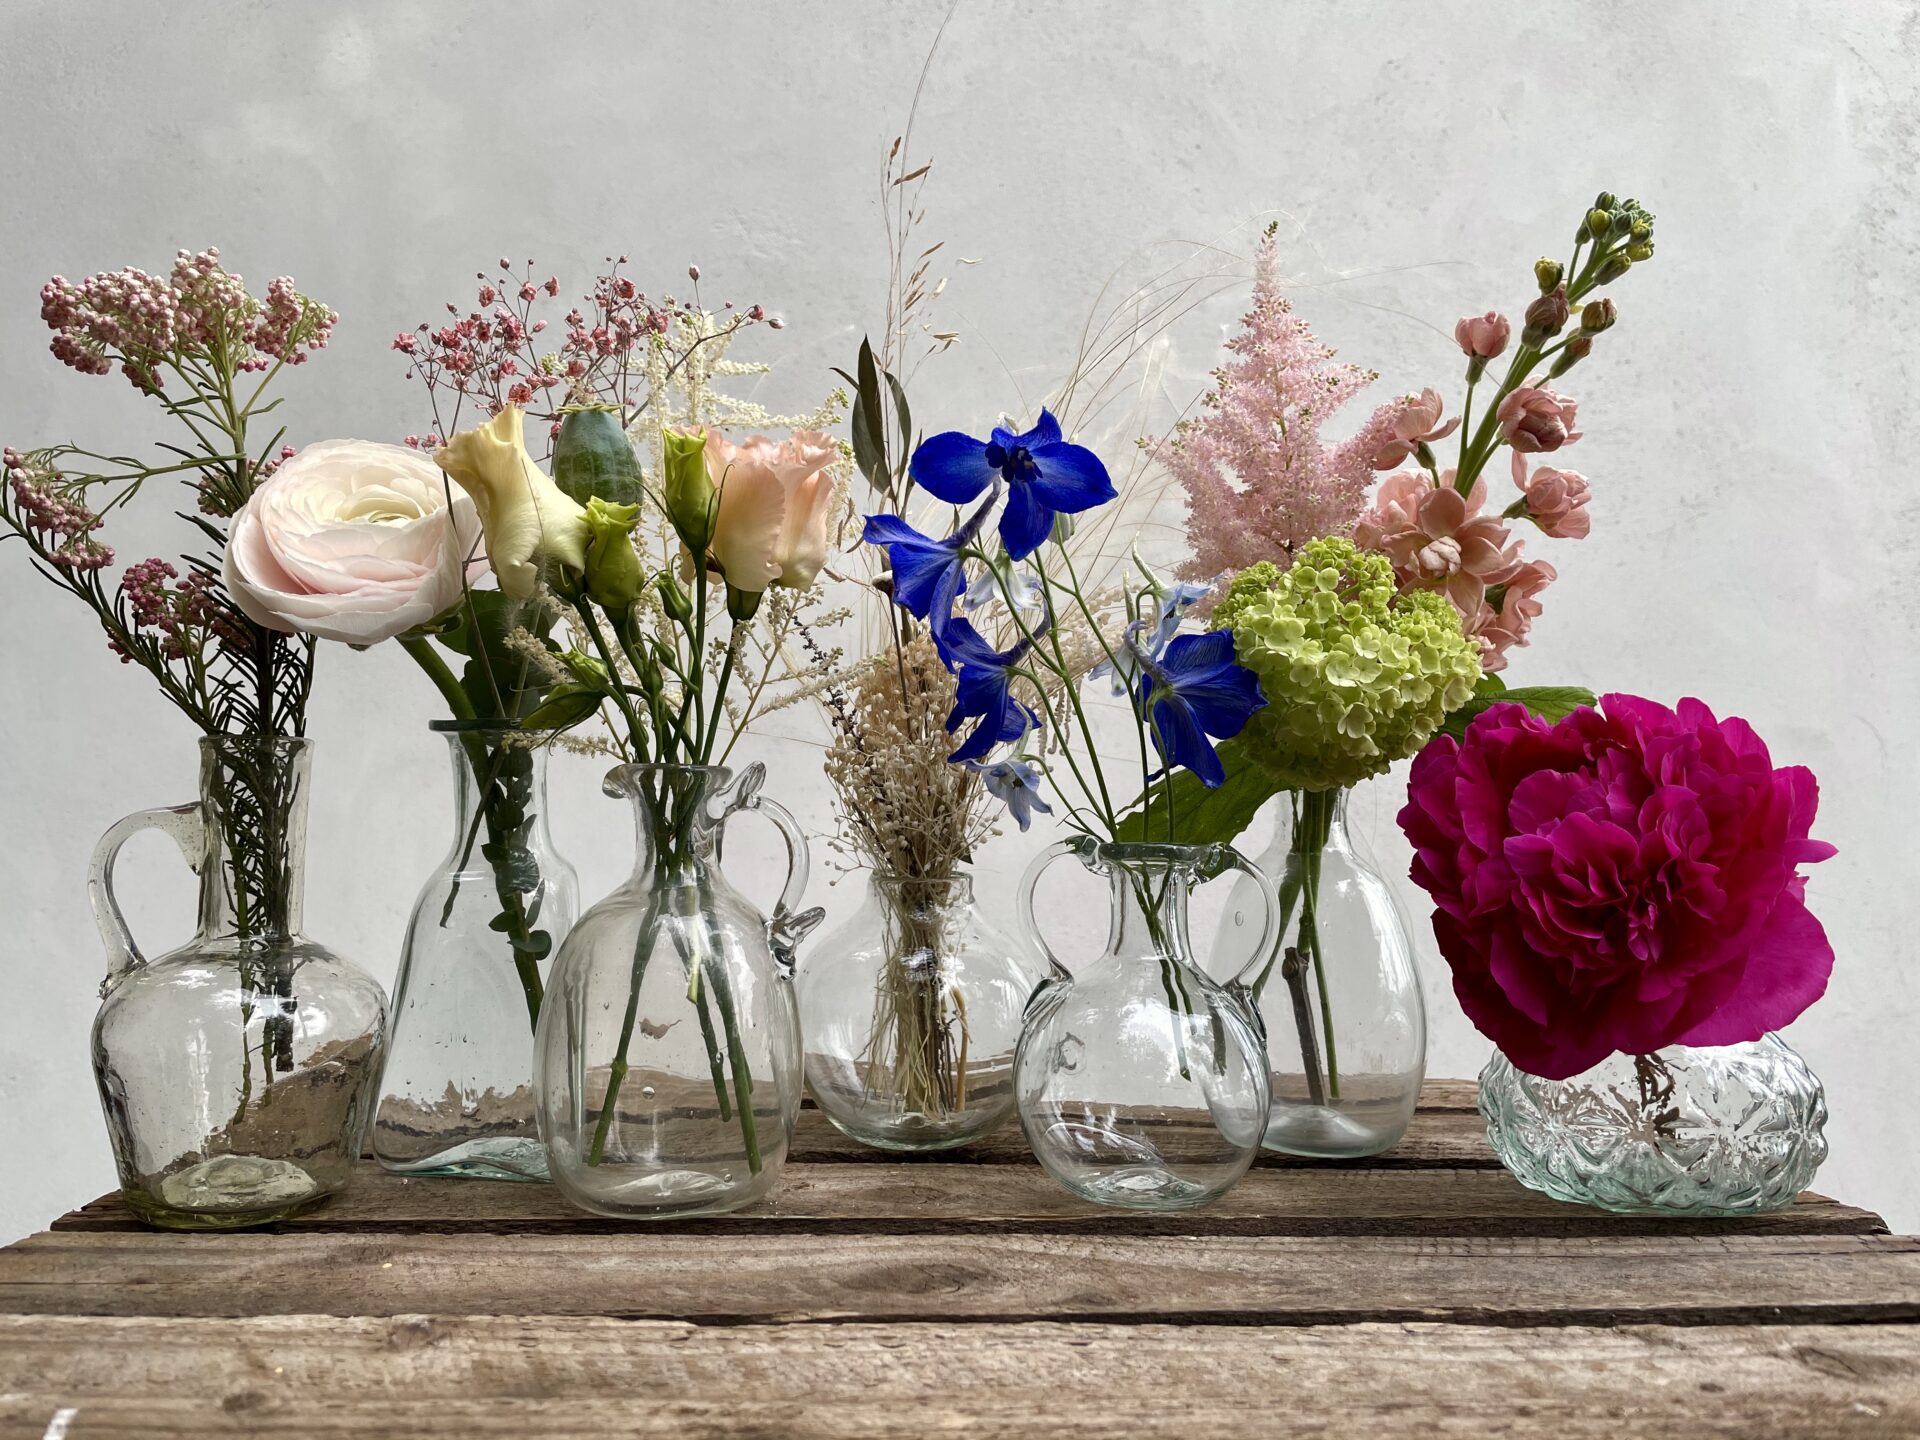 la-soufflerie-wedding-placeholder-bud-vases-with-flowers